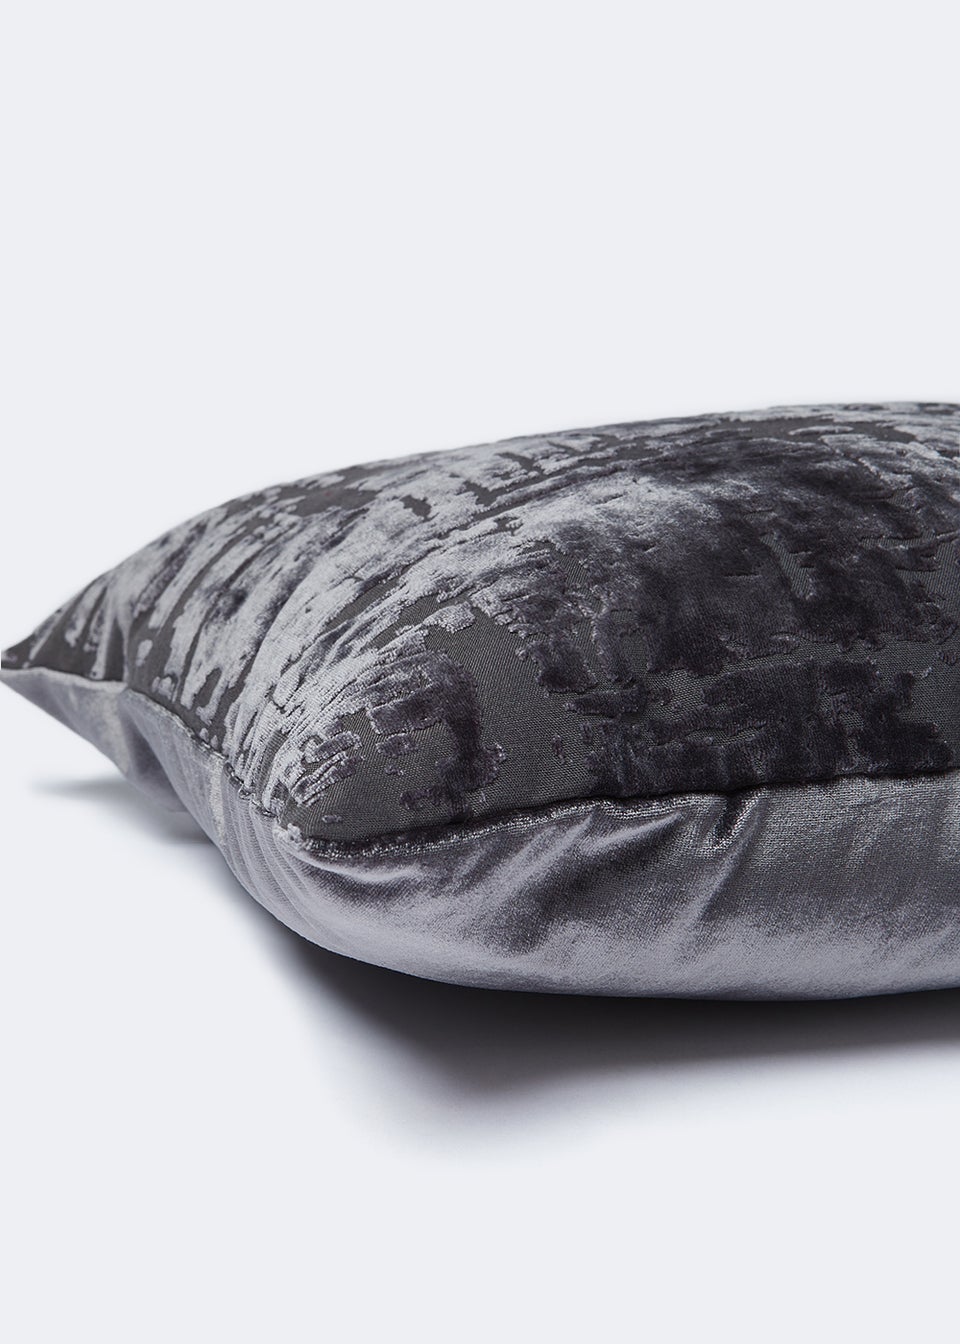 Farhi by Nicole Farhi Charcoal Velvet Cushion (48cm x 48cm)